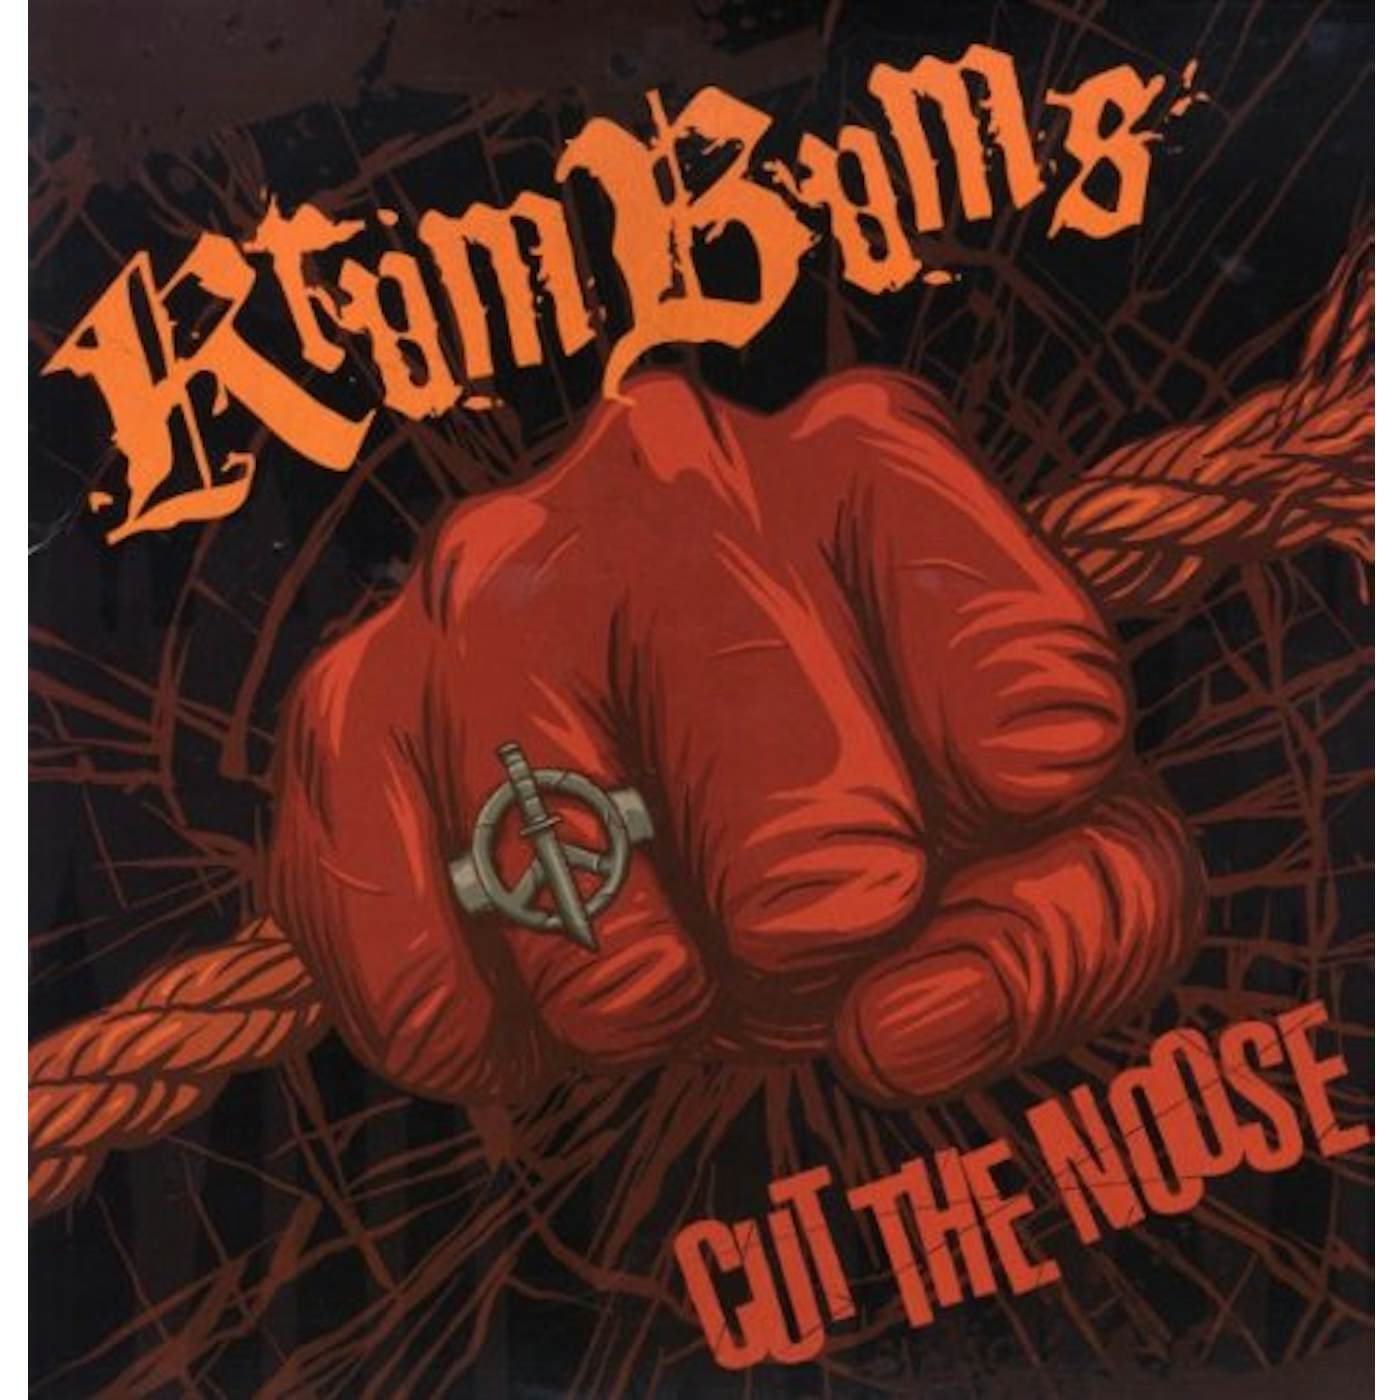 Krum Bums Cut The Noose Vinyl Record